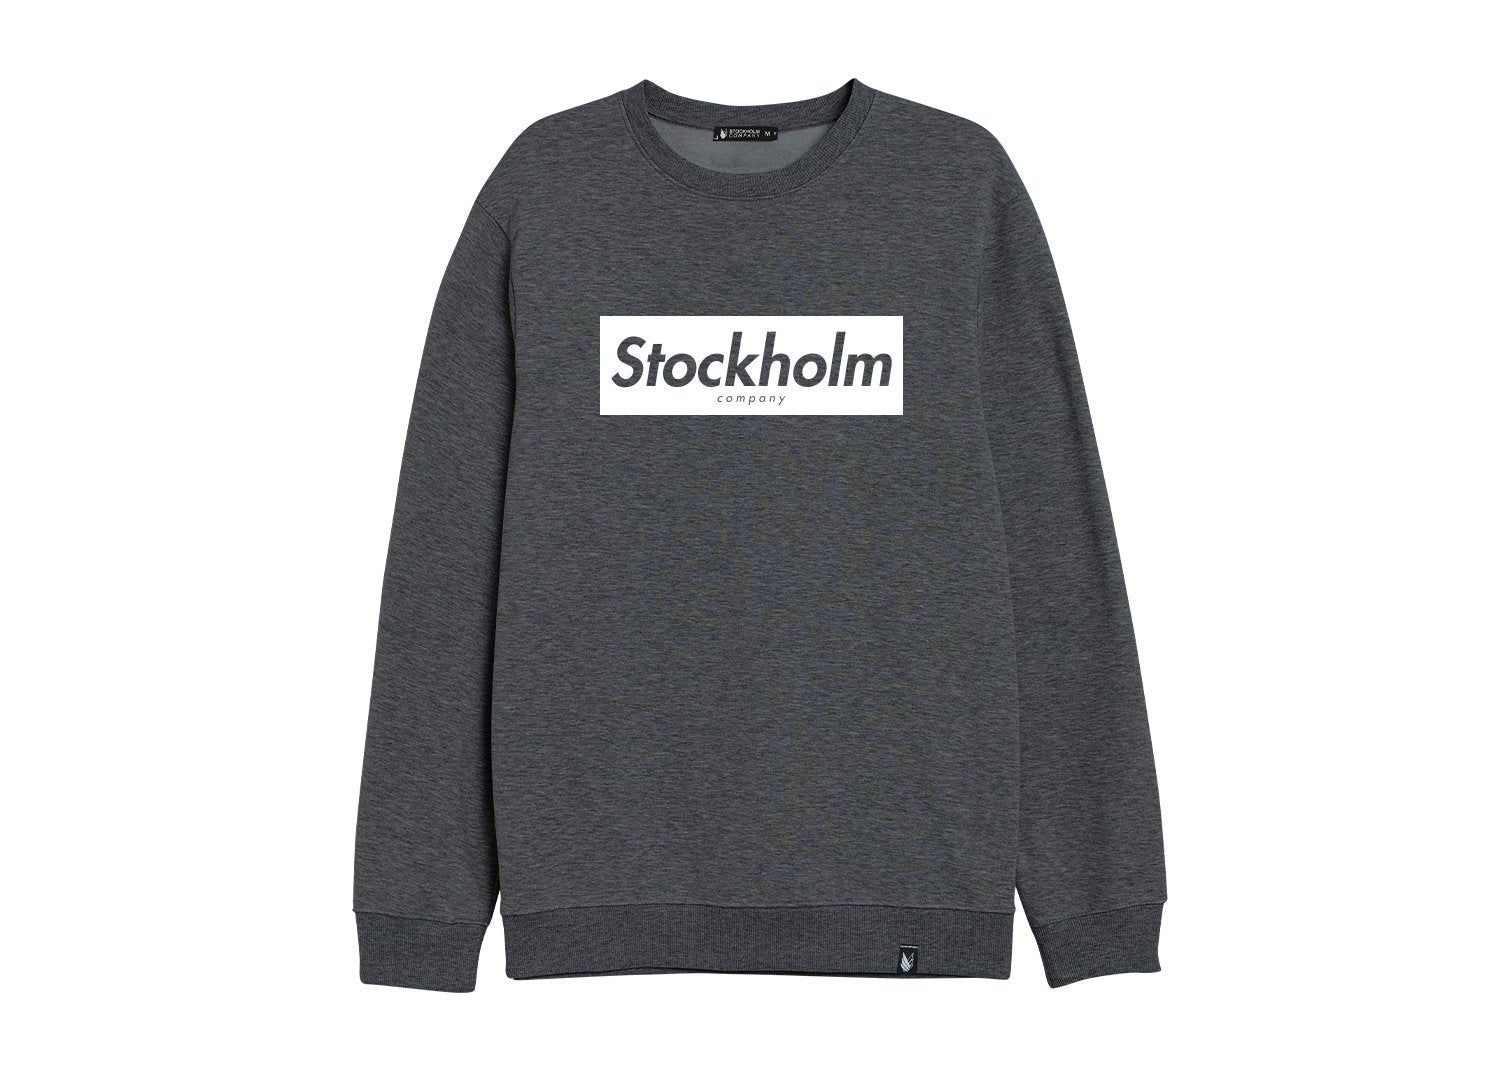 White Block Stockholm - sudadera - Stockholm Co. - Sudadera - stkm originals, sudadera, unisex